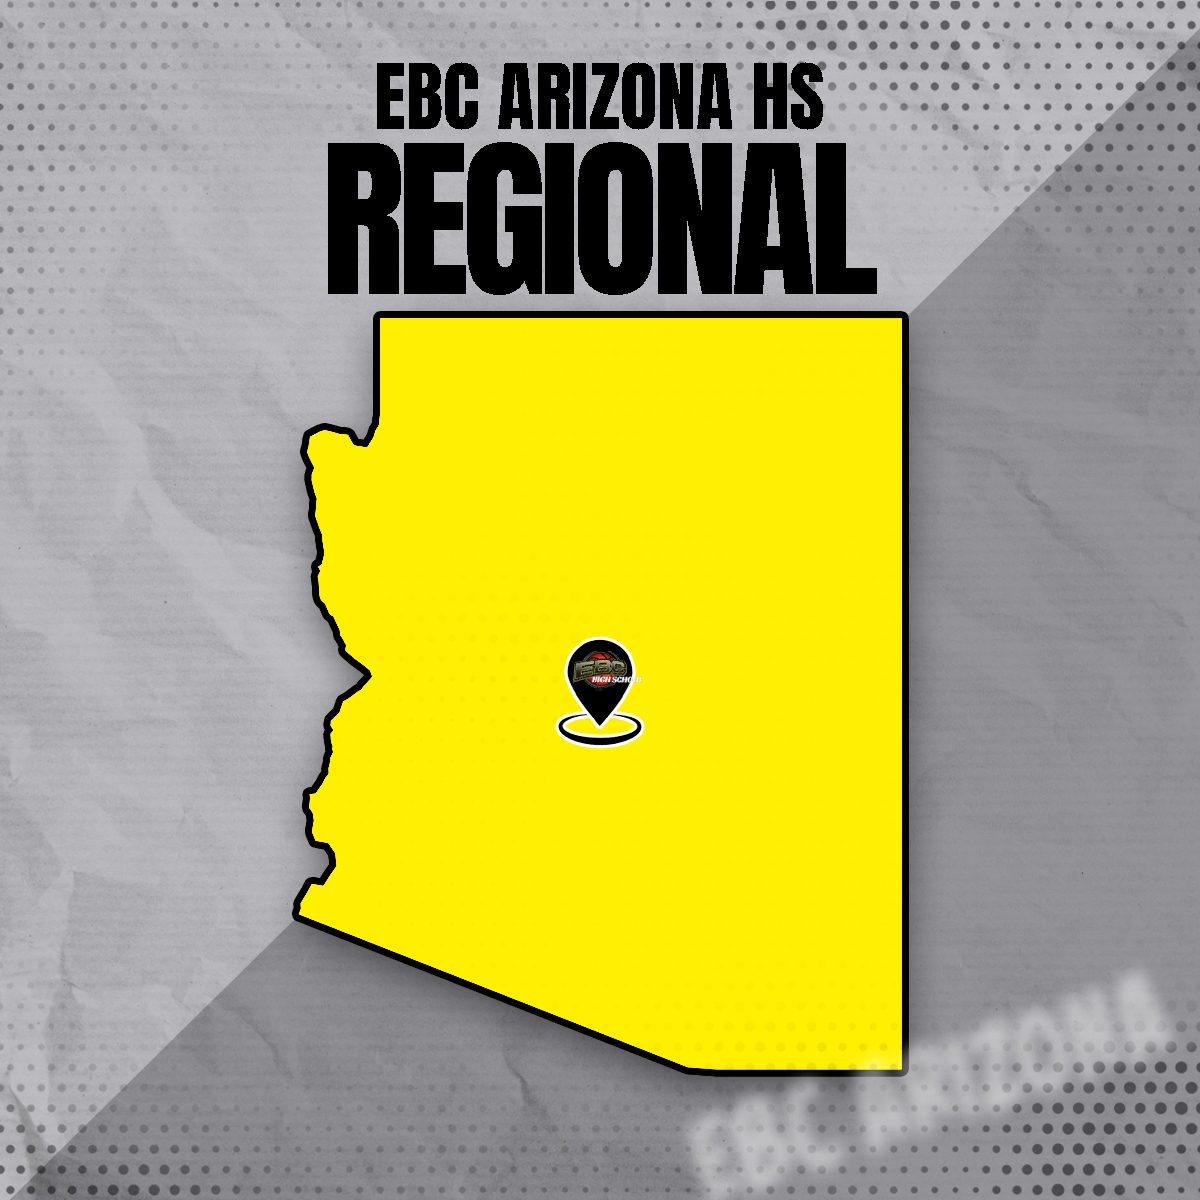 EBC Arizona HS, Sept 23-24